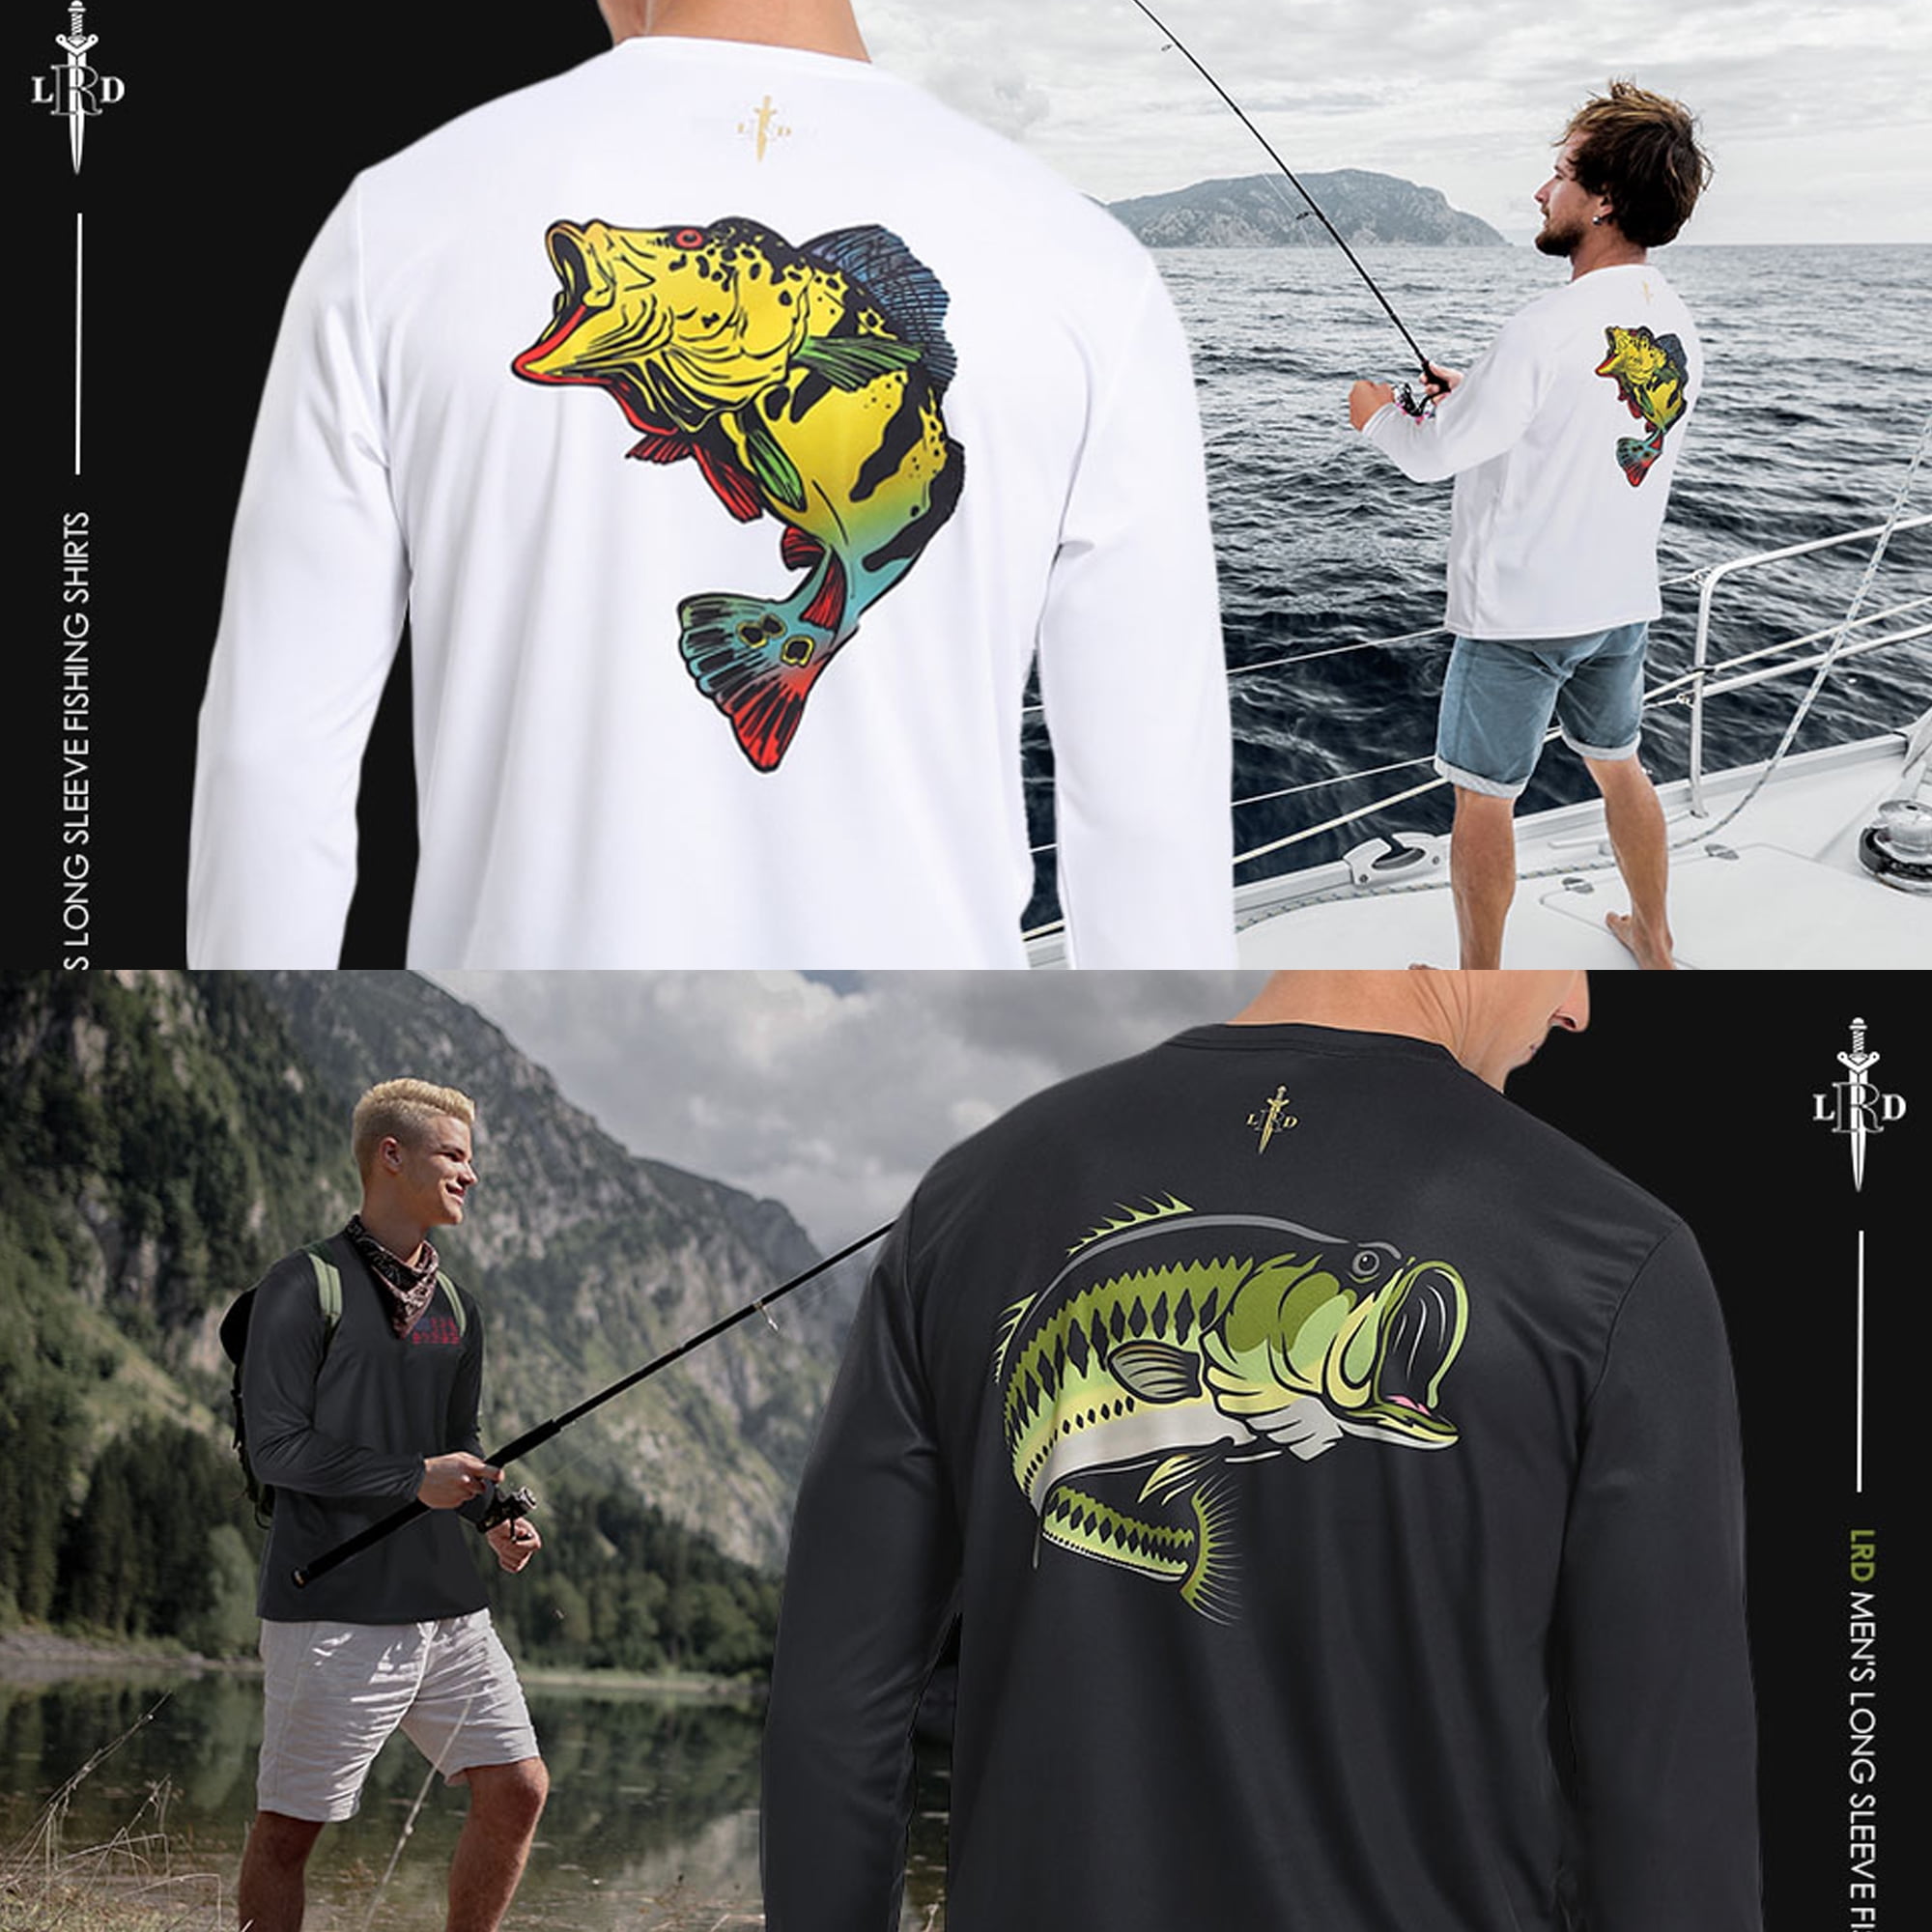 LRD Fishing Shirts for Men Long Sleeve UPF 50 Sun Protection